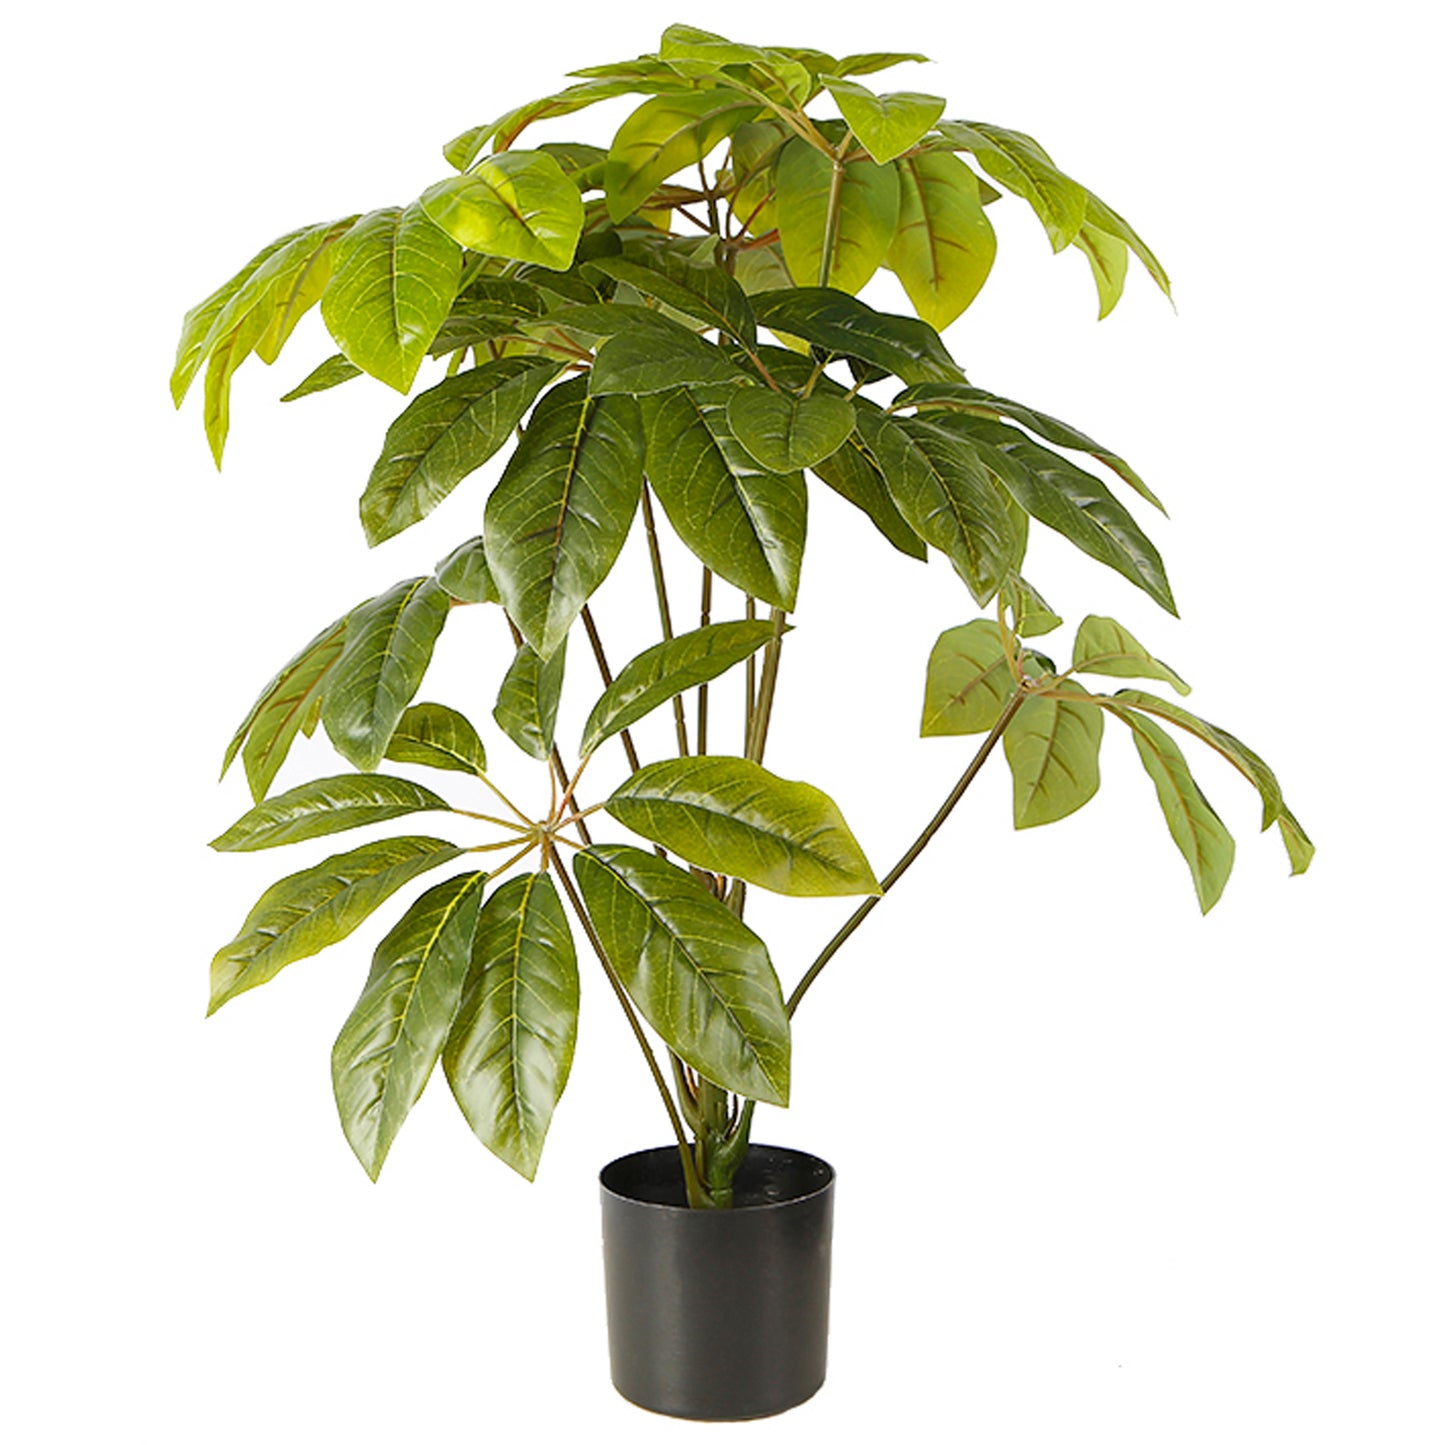 25.5" Artificial Plant in Pot